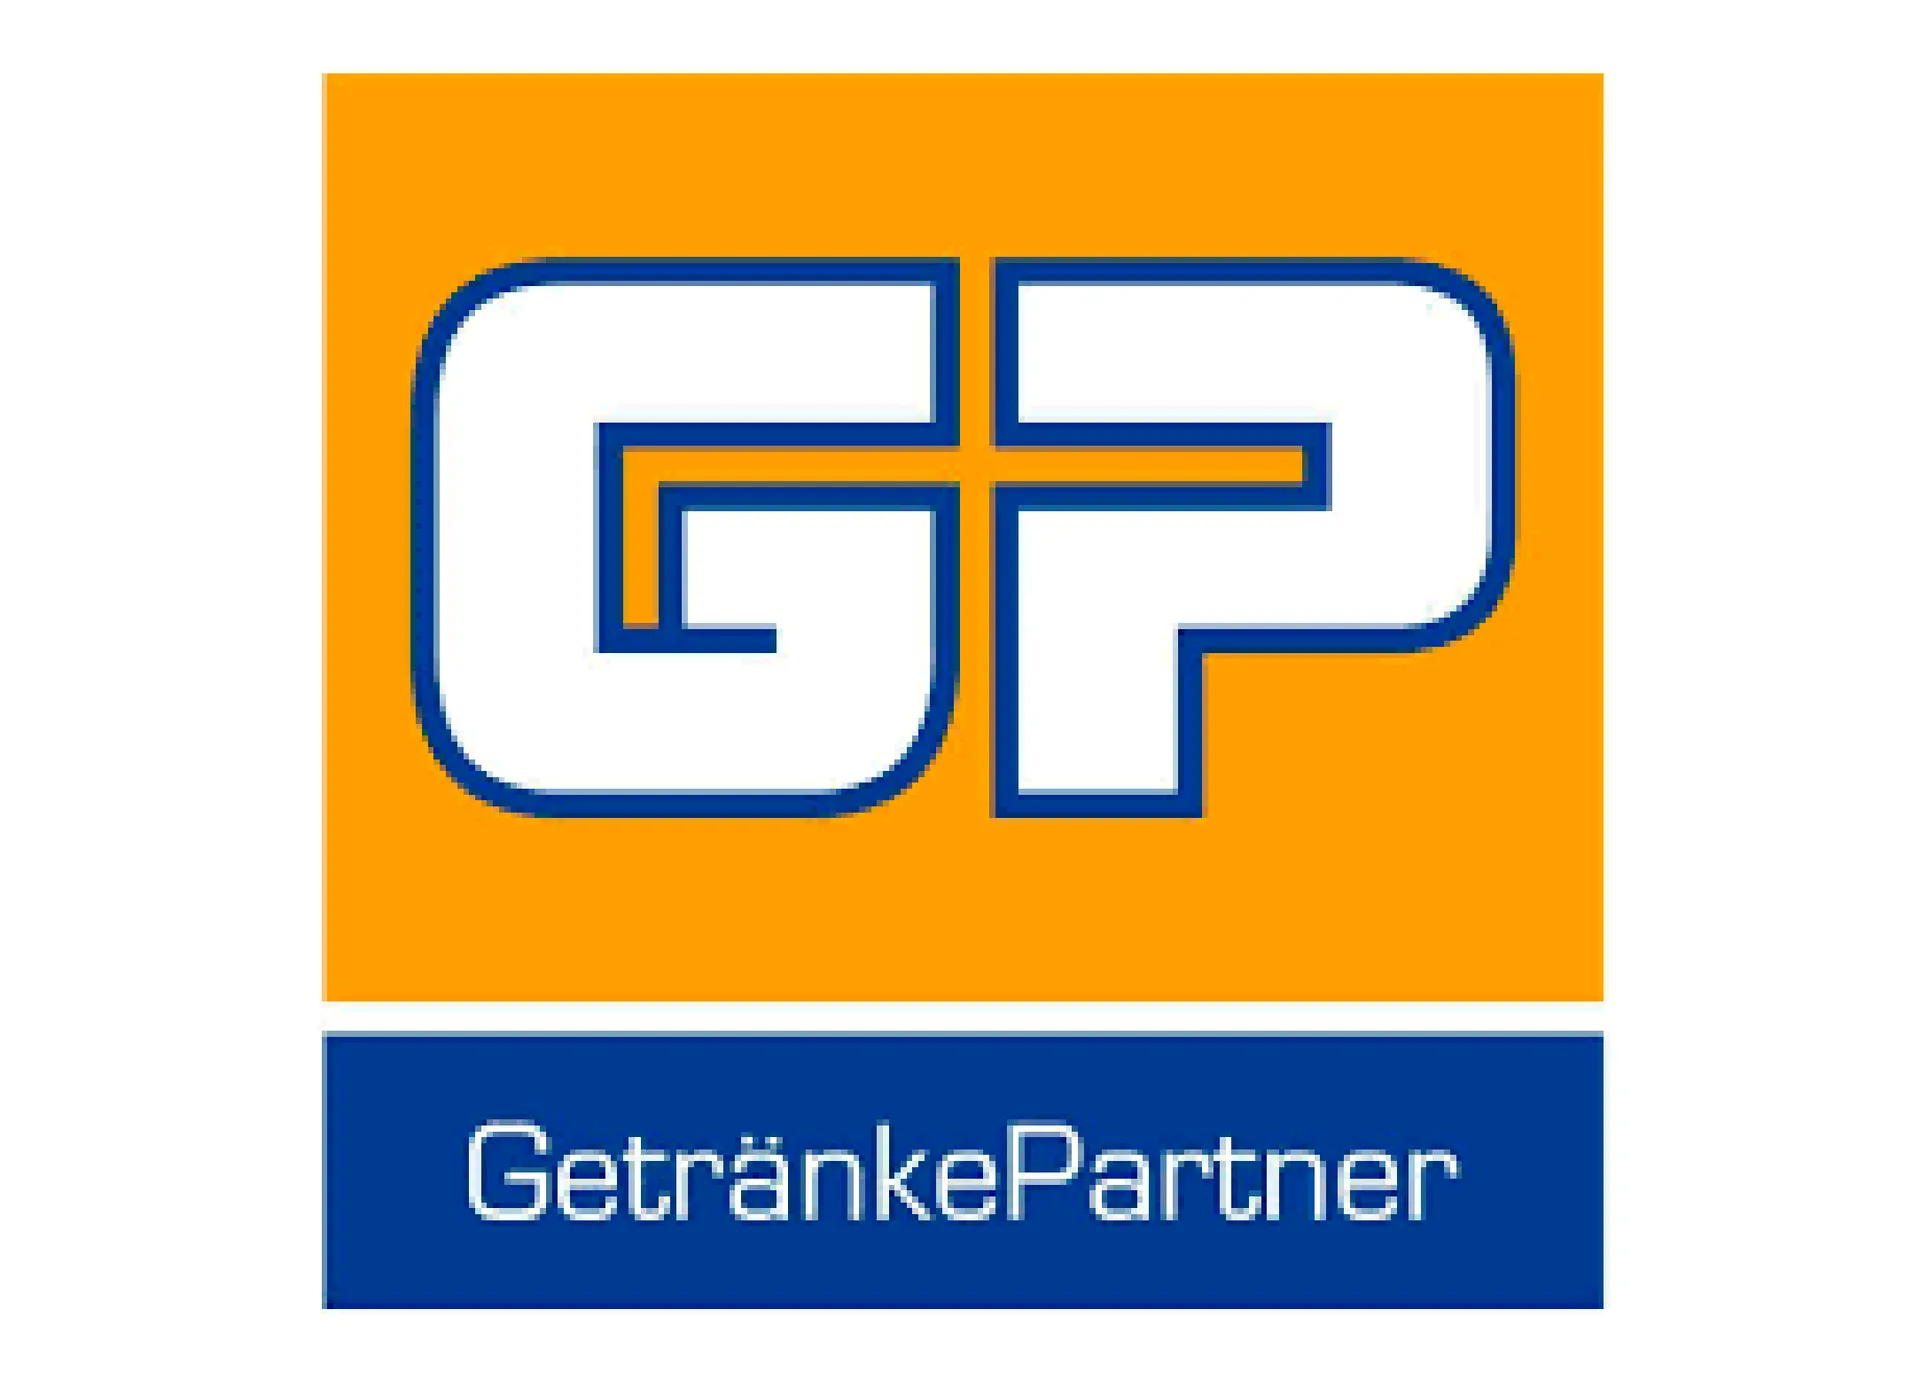 GETRANKEPARTNER logo